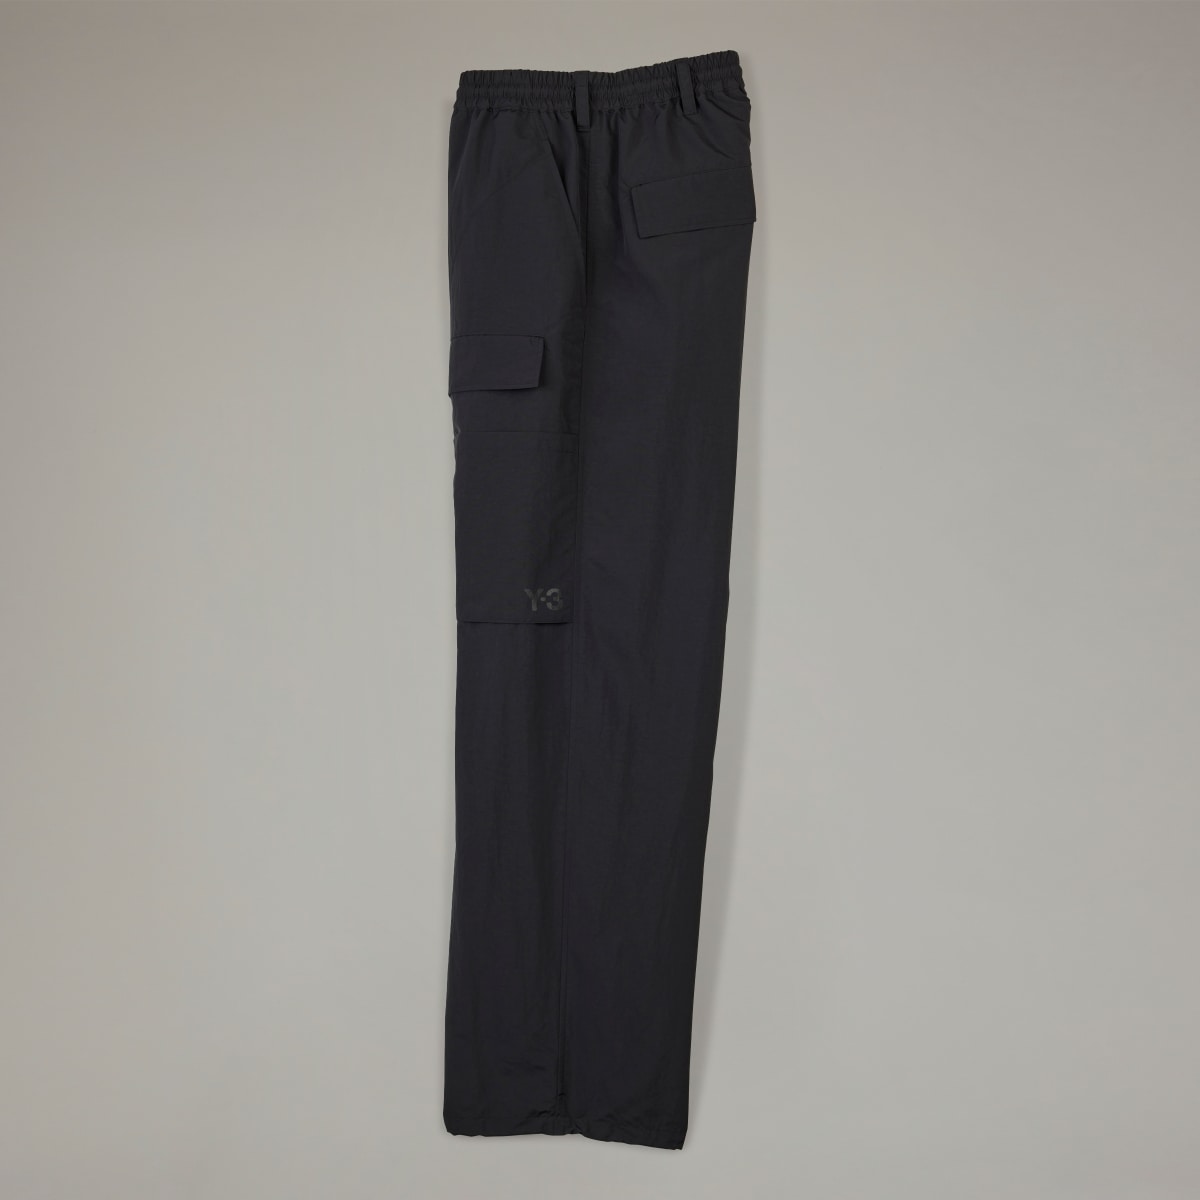 Adidas Pantalon en nylon froissé Y-3. 5